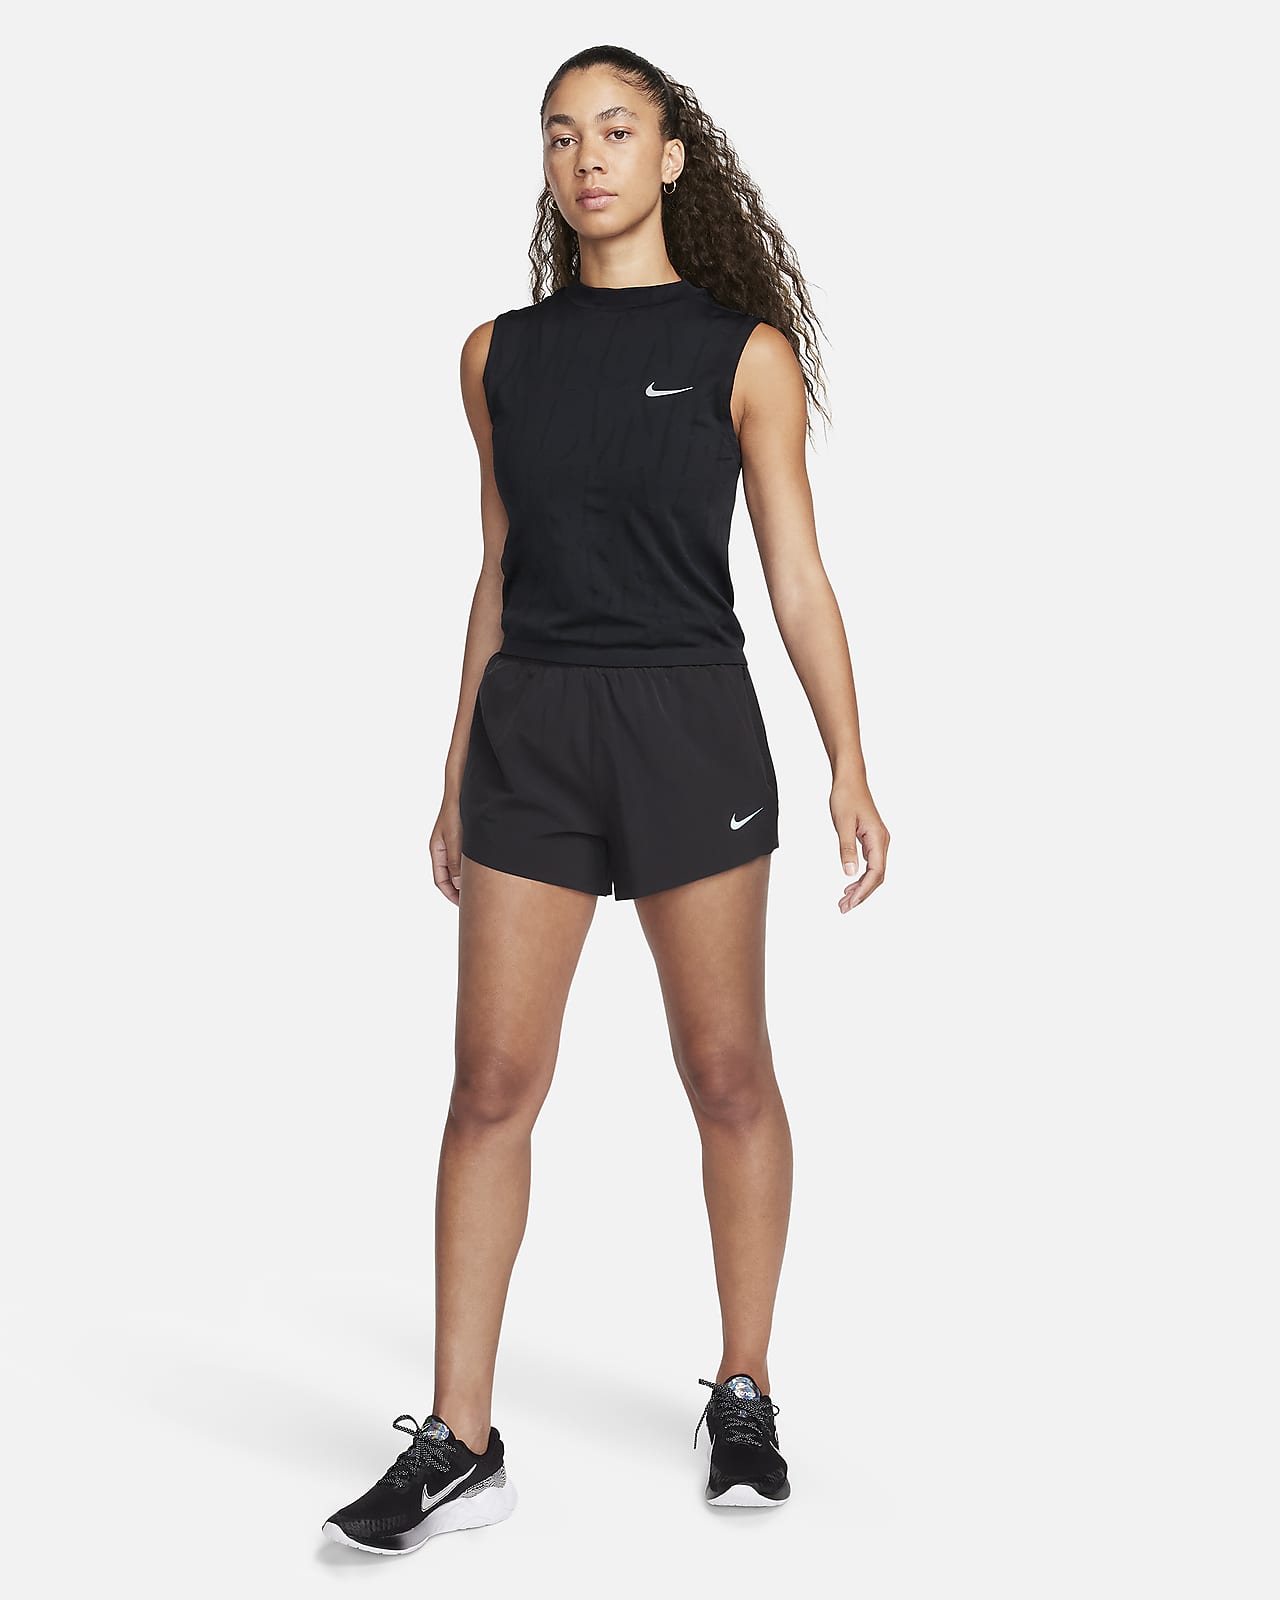 Short de Compression Femme - FONDUPIN - Short Yoga avec Poches - Noir -  Running - Fitness - Taille Haute